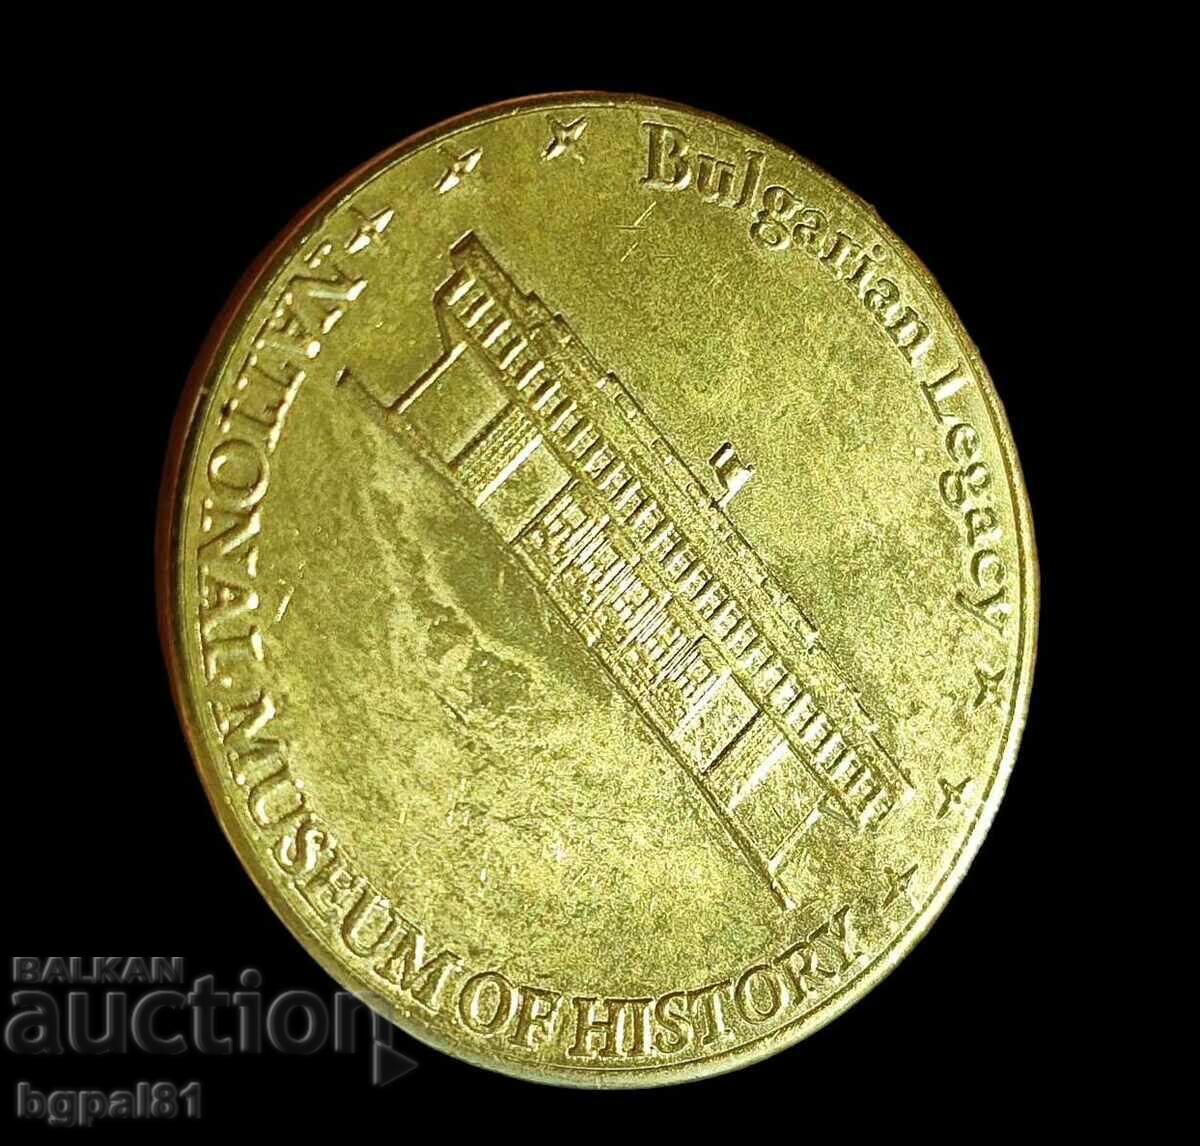 N.I.M. - "Bulgarian legacy" medal issue